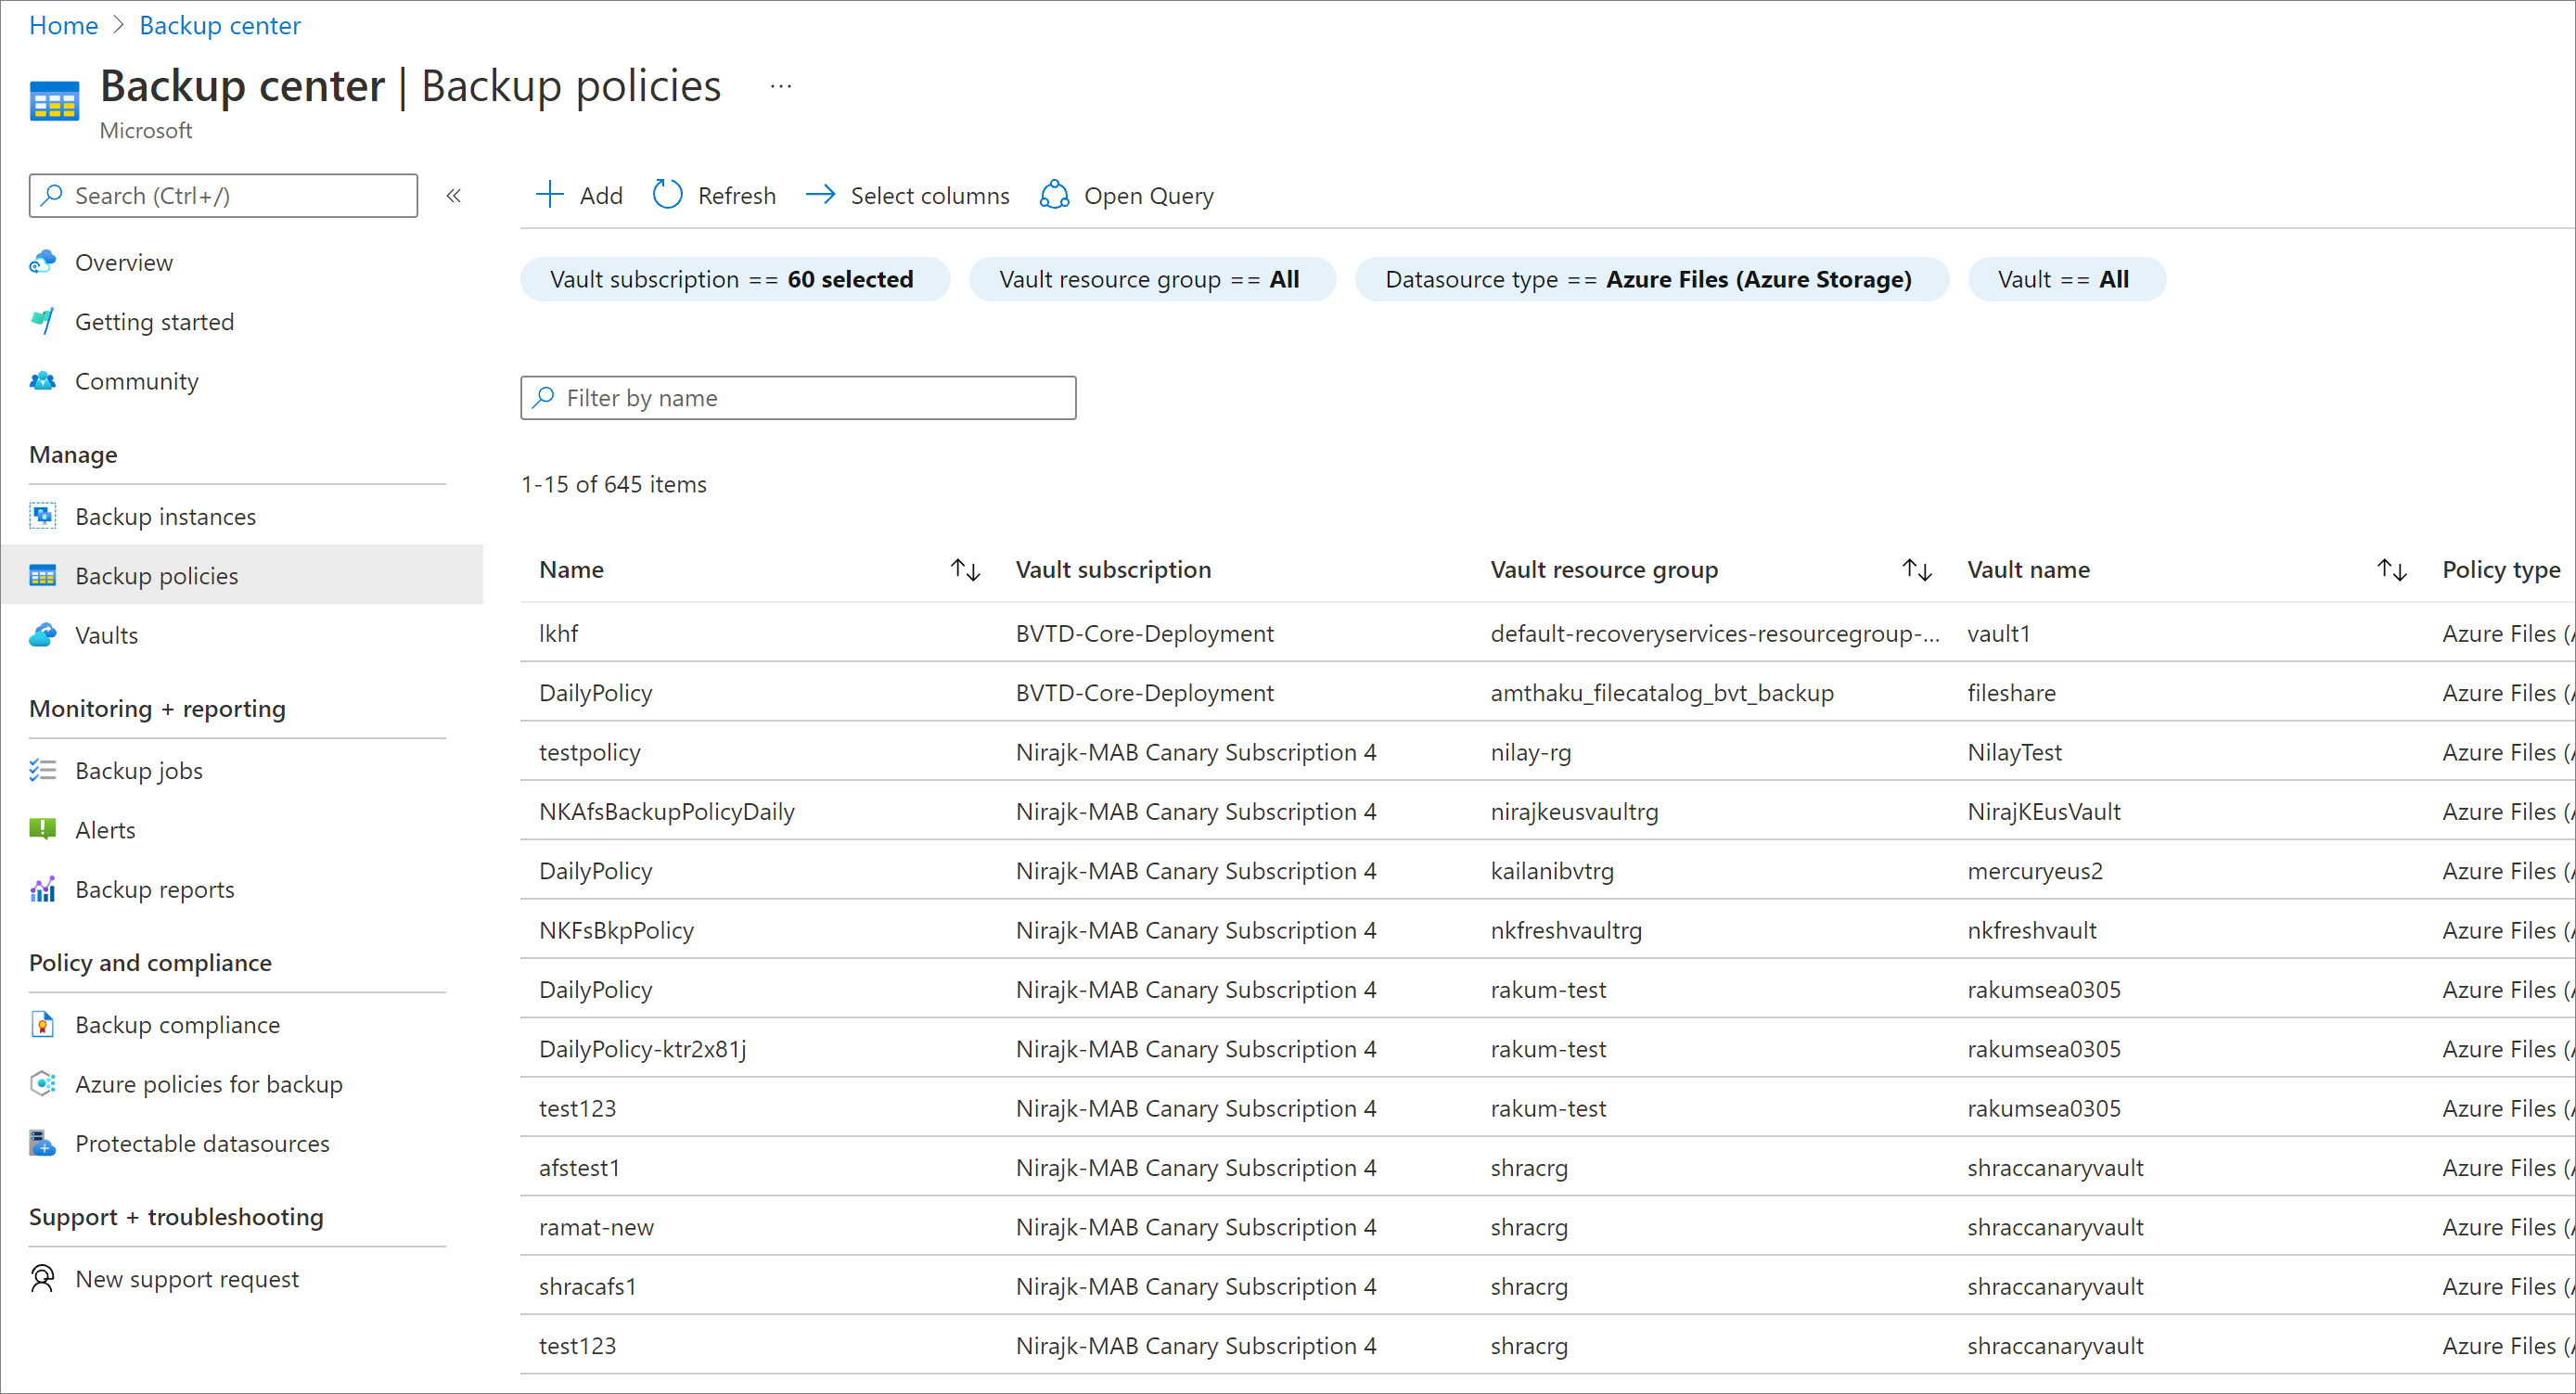 Screenshot showing all Backup policies in vault.